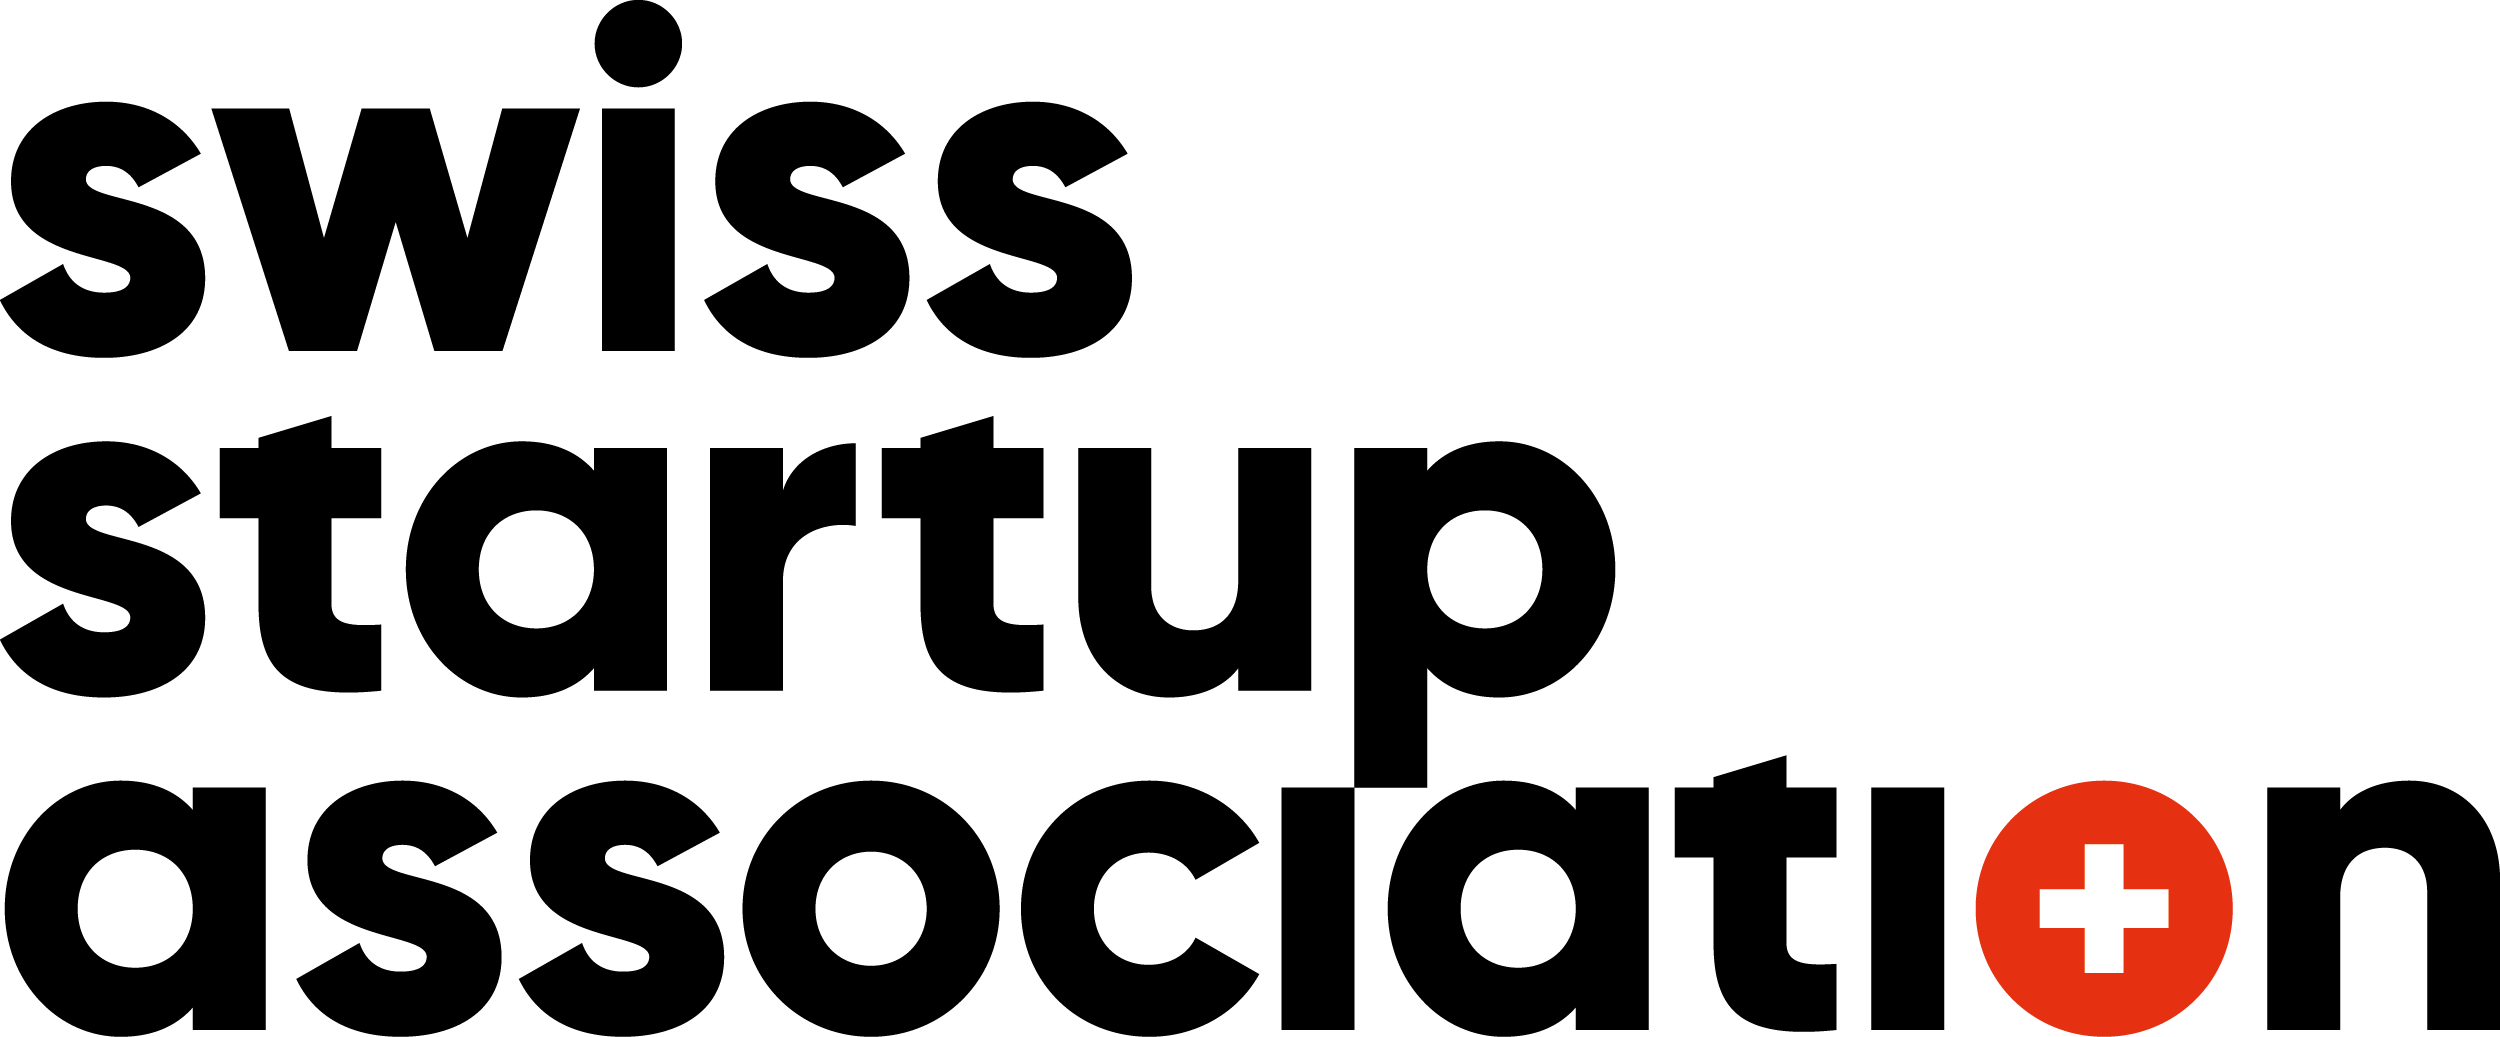 Swiss Startup Accociation